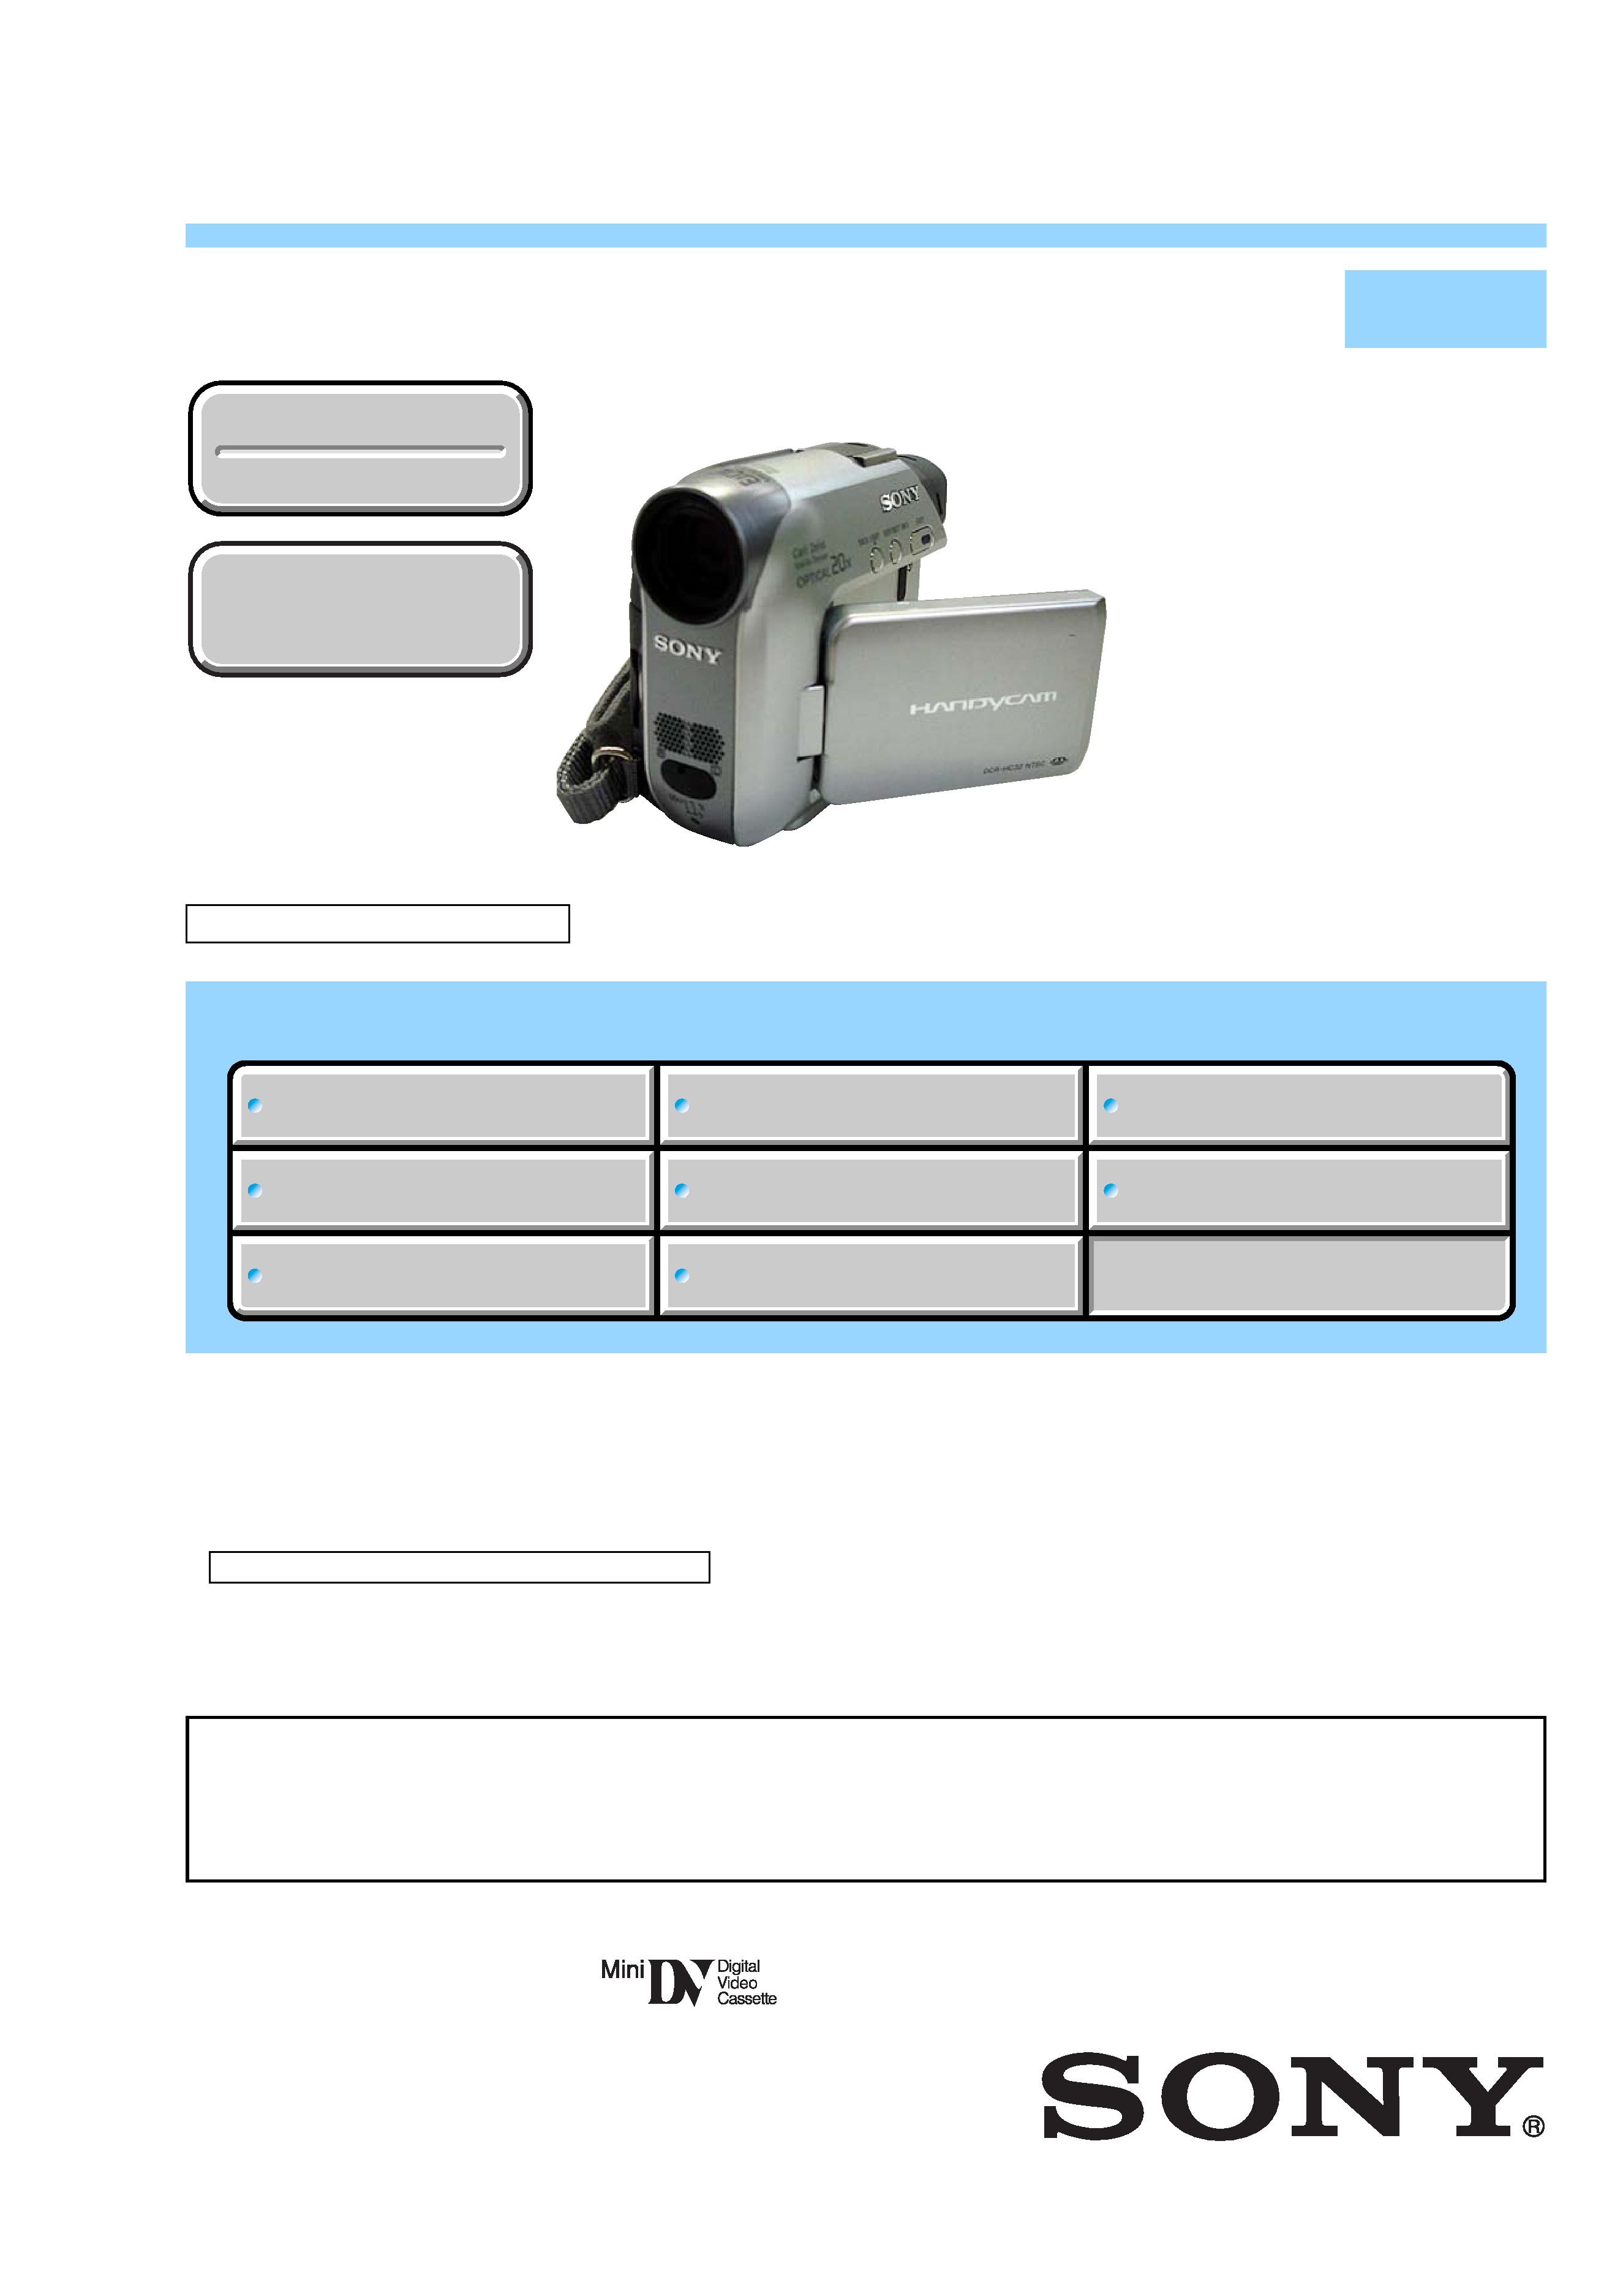 Sony Handycam DCR-HC21E Service Manual Download